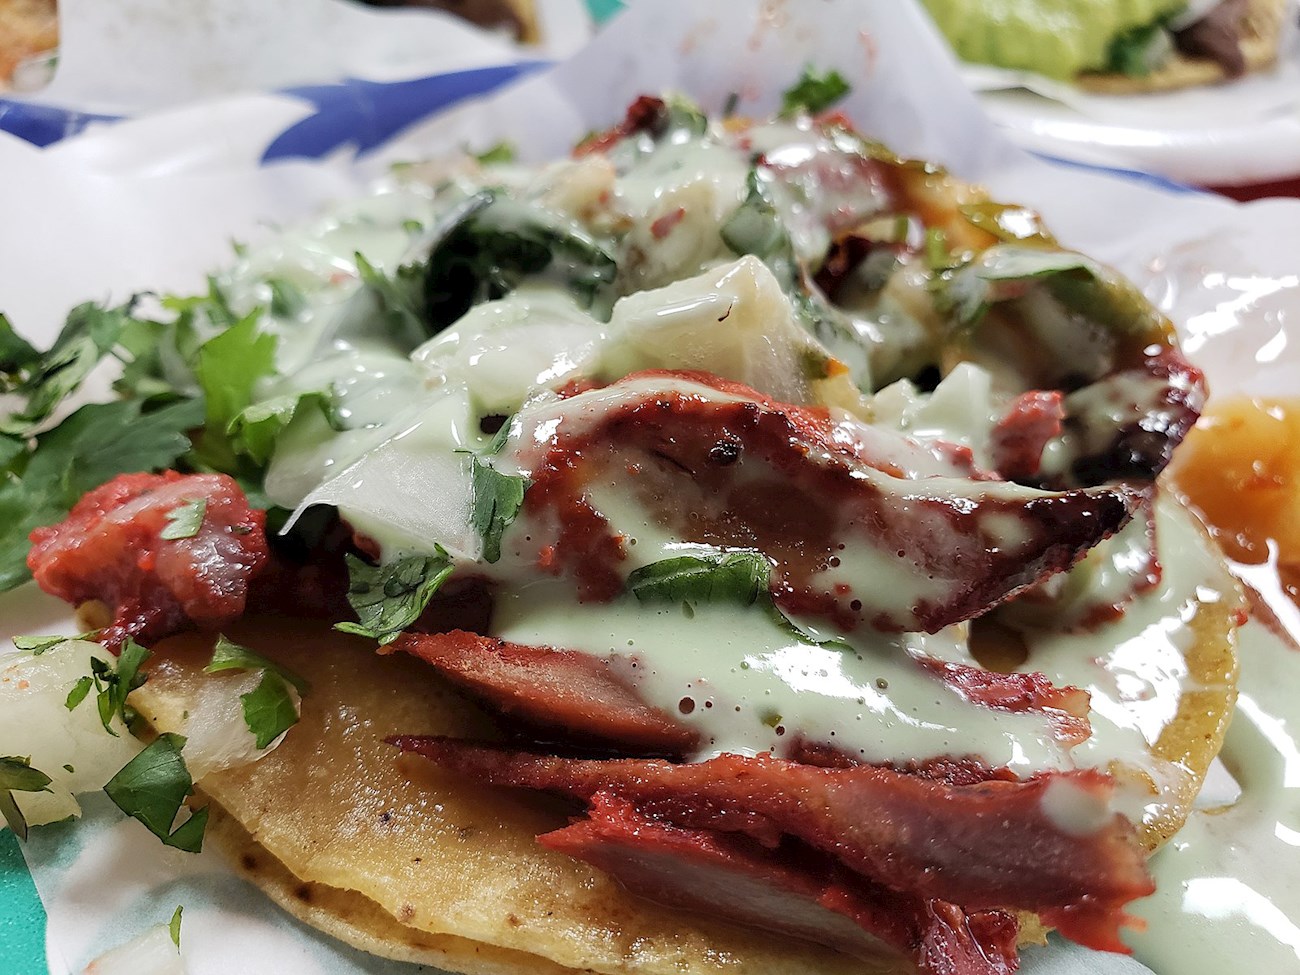 Tacos De Adobada Traditional Street Food From Mexico